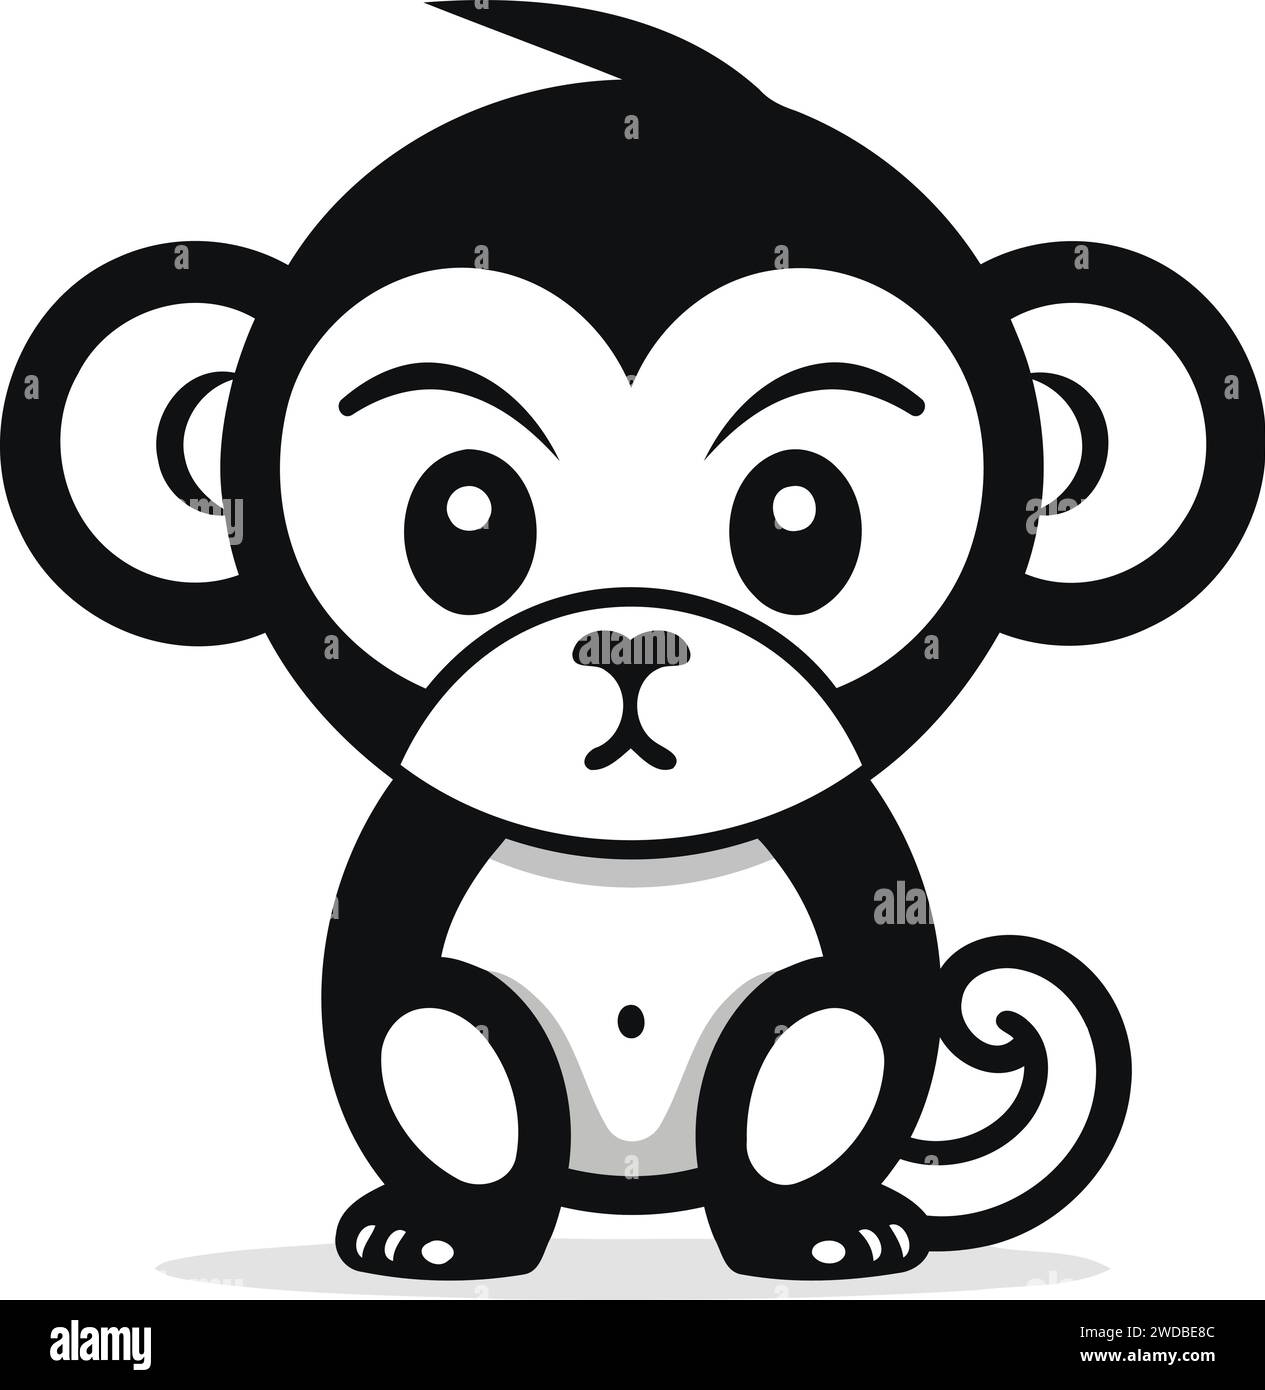 Monkey cartoon icon. Animal cute cartoon design. Vector illustration. Stock Vector